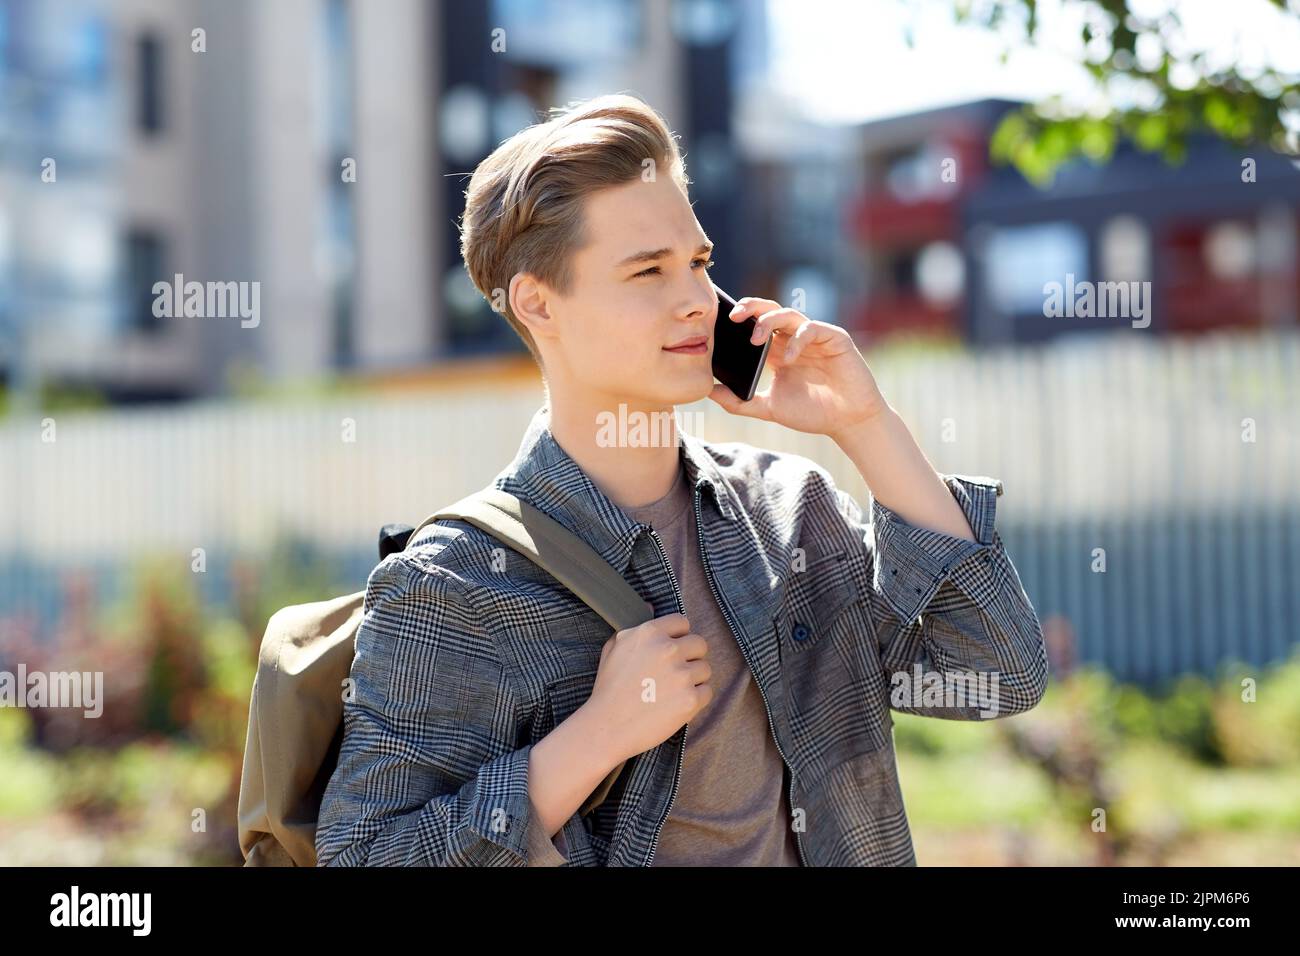 teenage student boy calling on smartphone in city Stock Photo